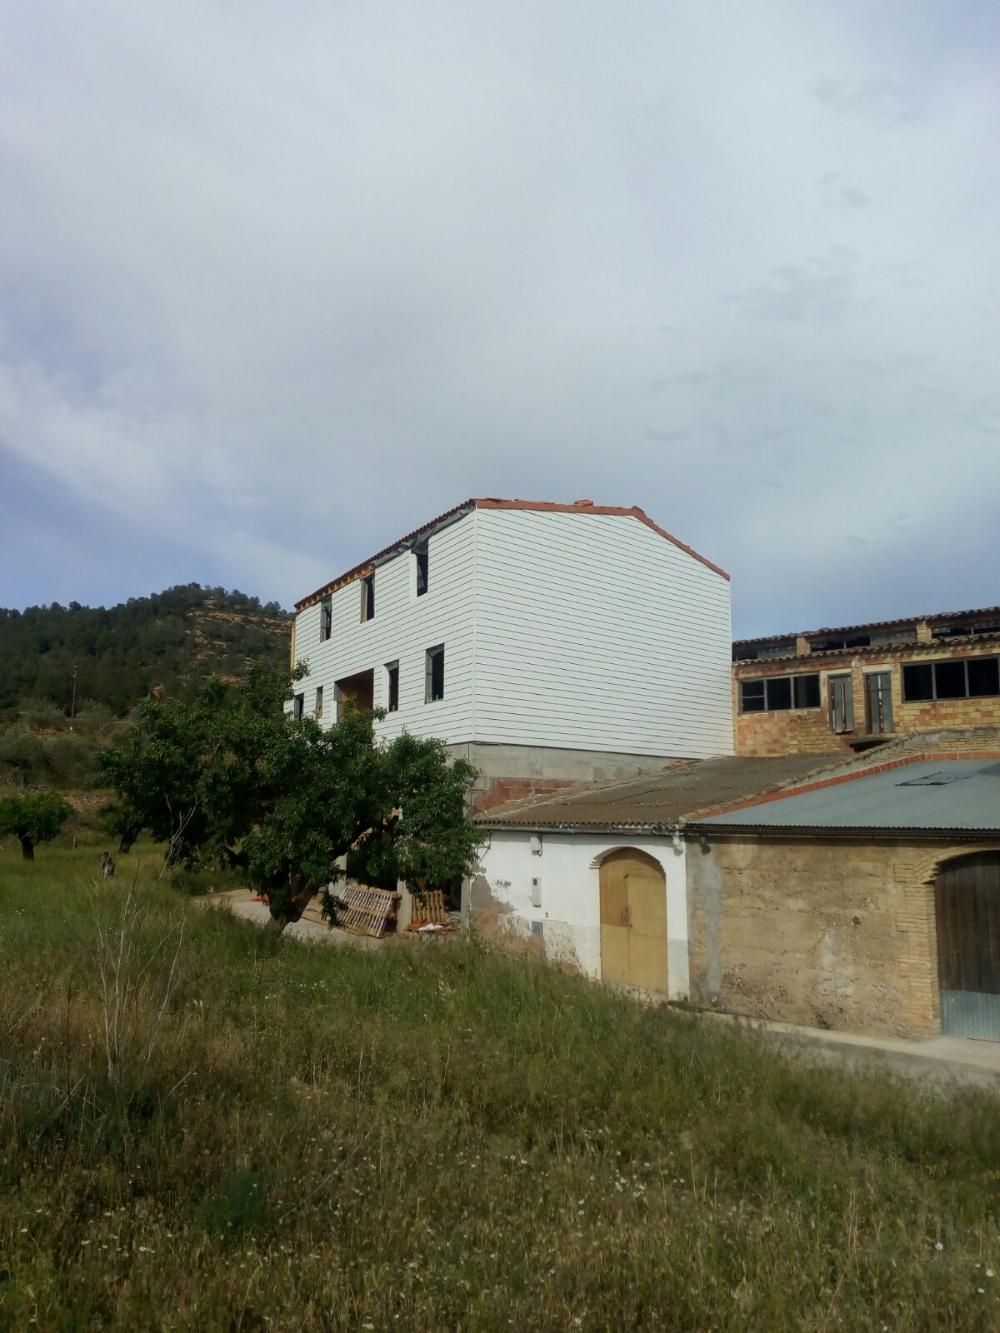 Farmhouse siding project using SHERA plank in Spain